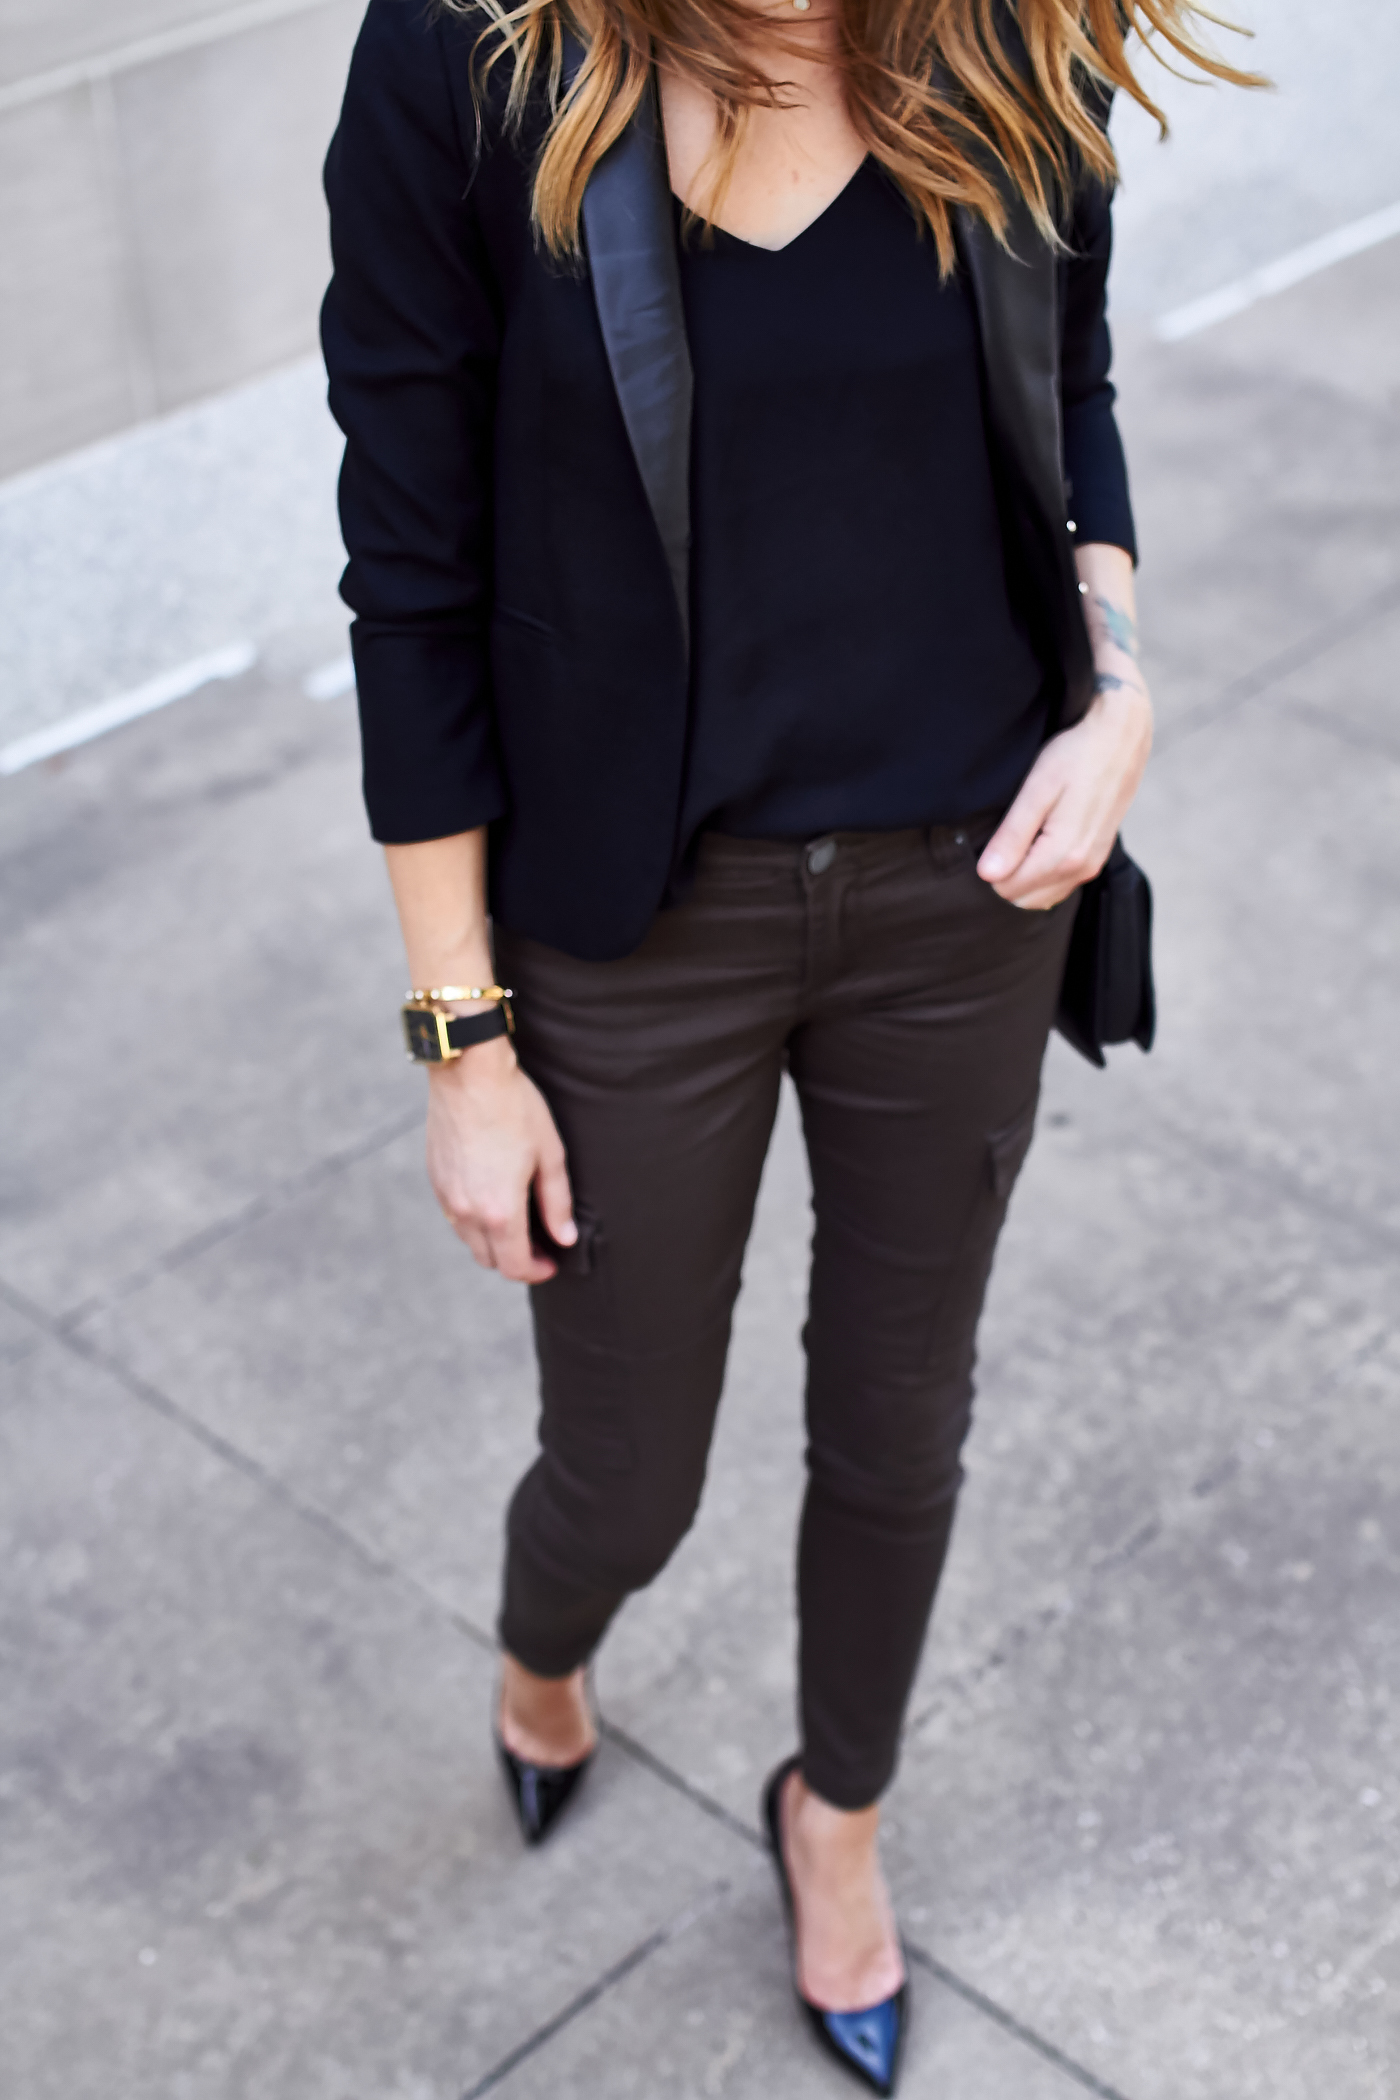 fashion-jackson-black-leather-trim-blazer-cargo-pocket-skinny-pants-louboutin-black-pumps